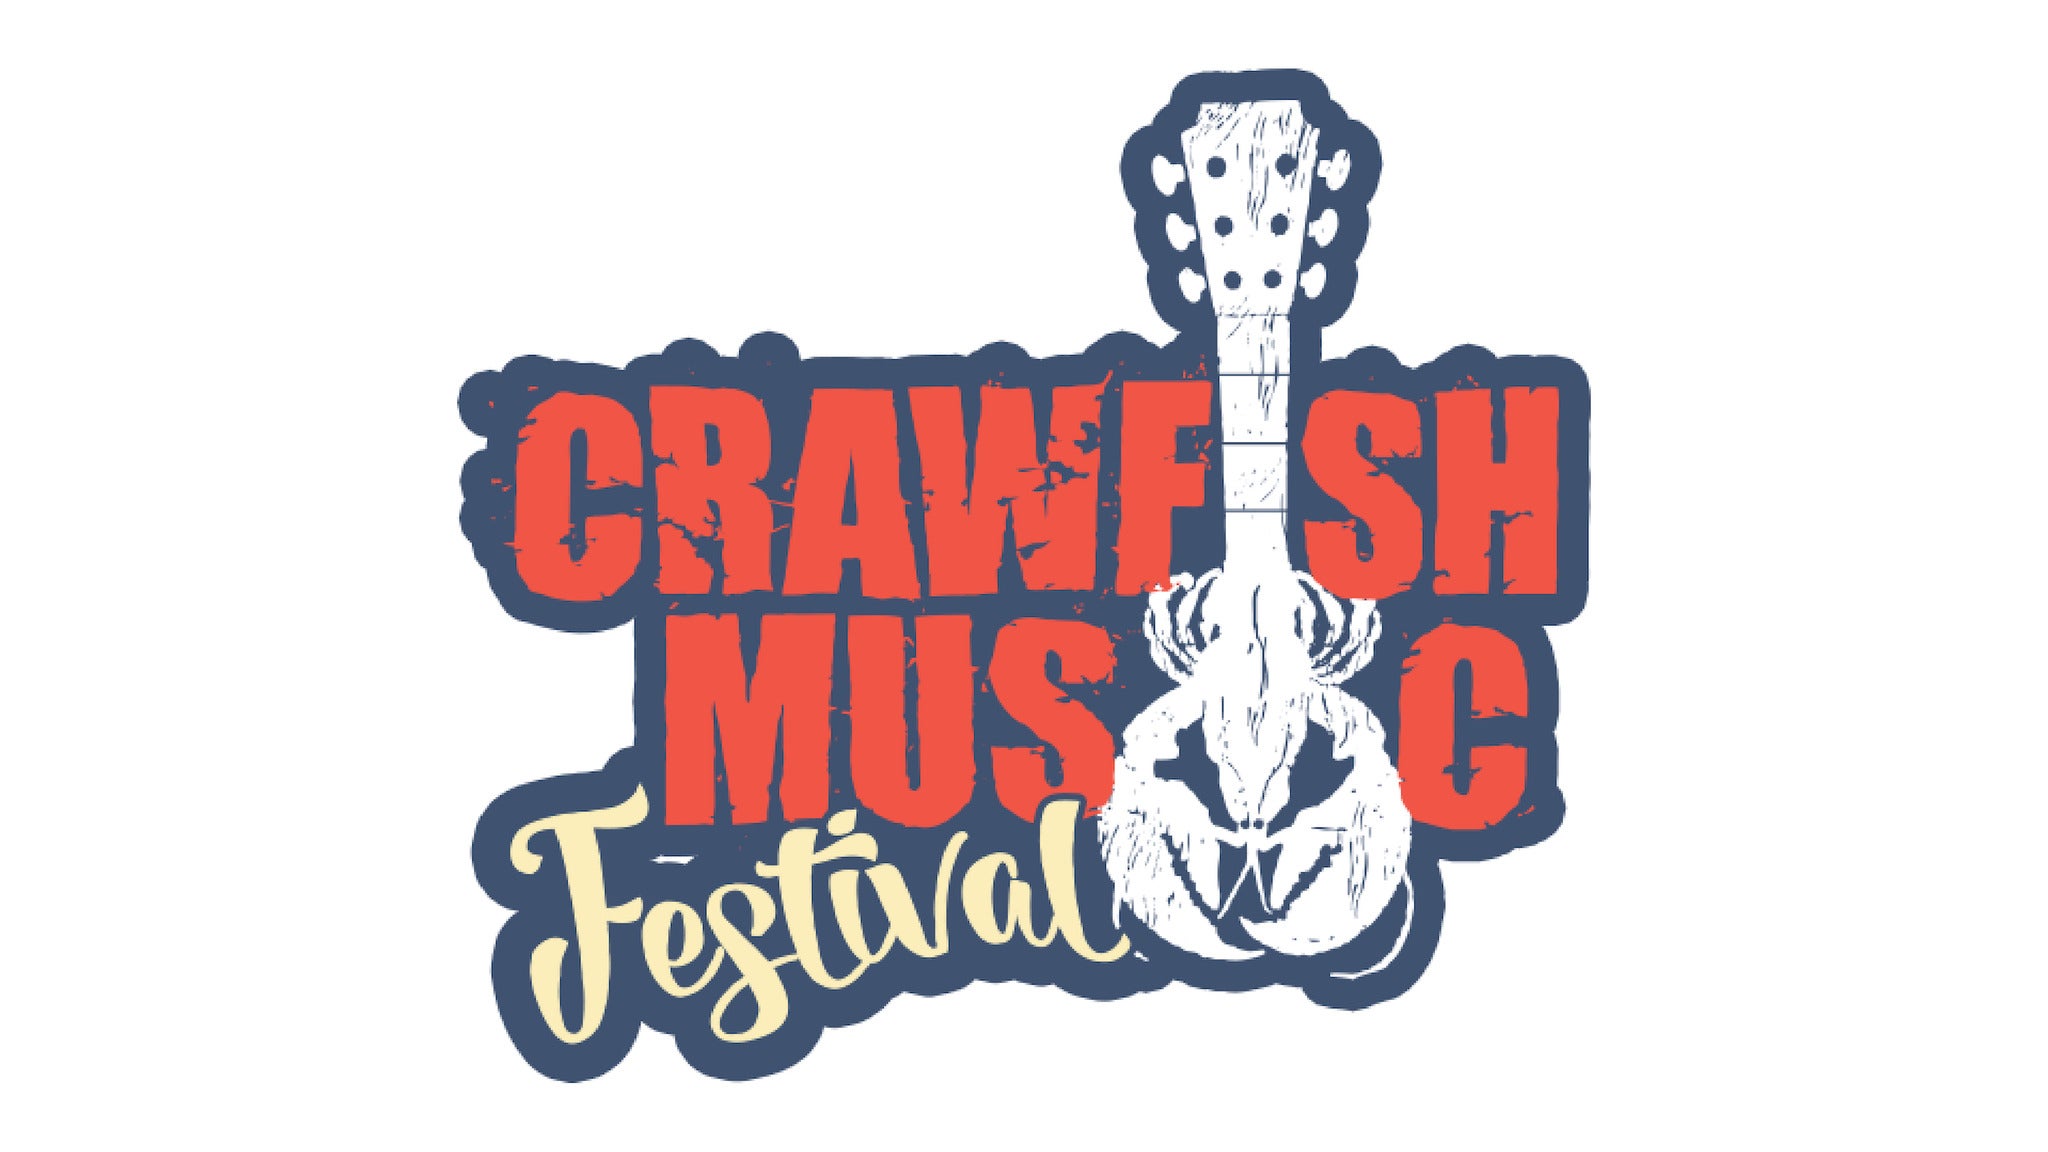 members only presale code for Crawfish Music Festival Feat. Jordan Davis, Seaforth, Chase McDaniel advanced tickets in Biloxi